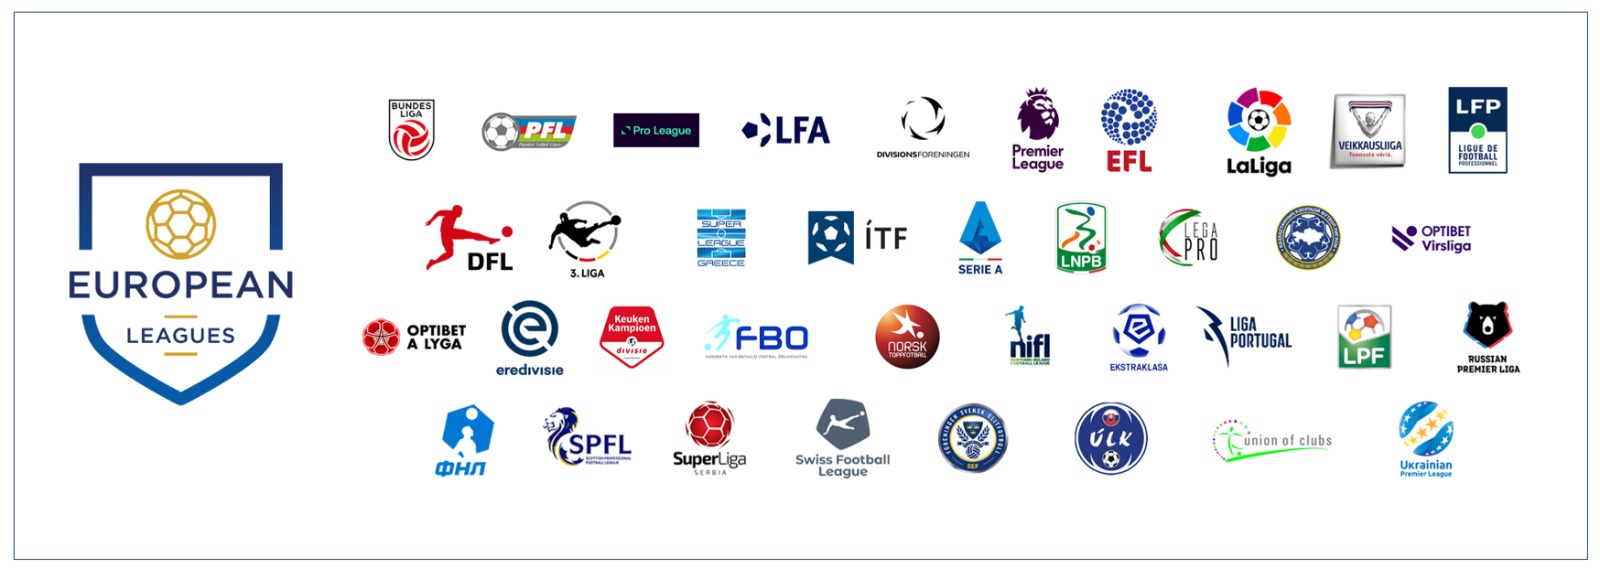 European Leagues Logos